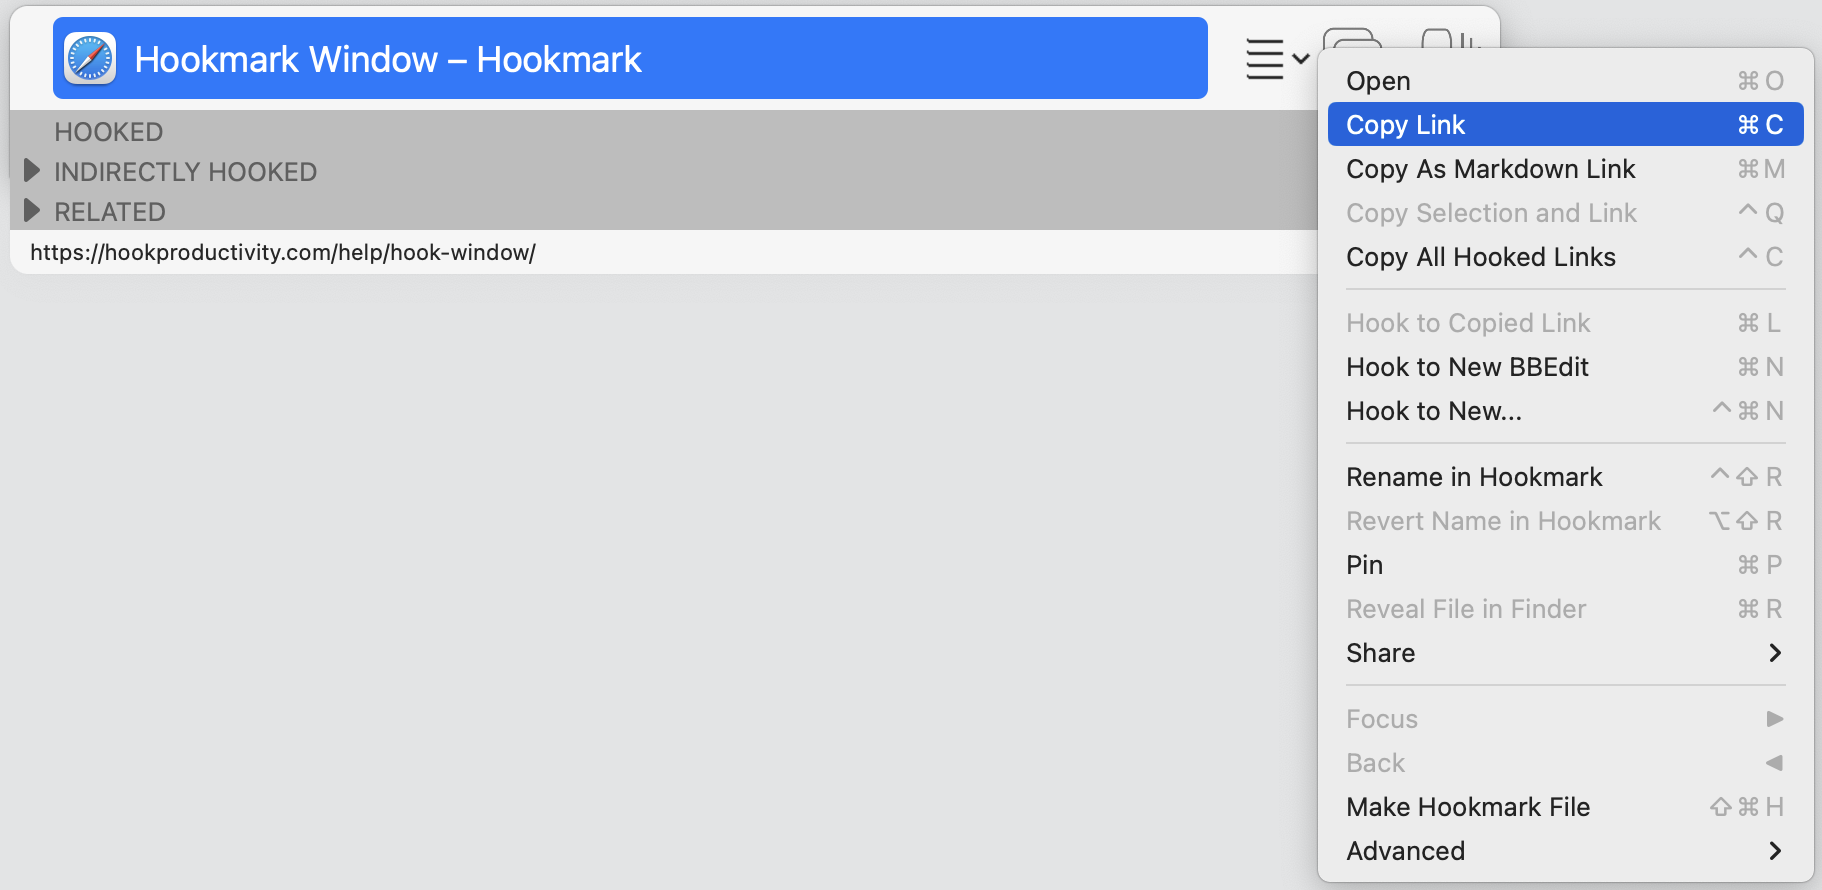 Hookmark-6-window-Action-menu